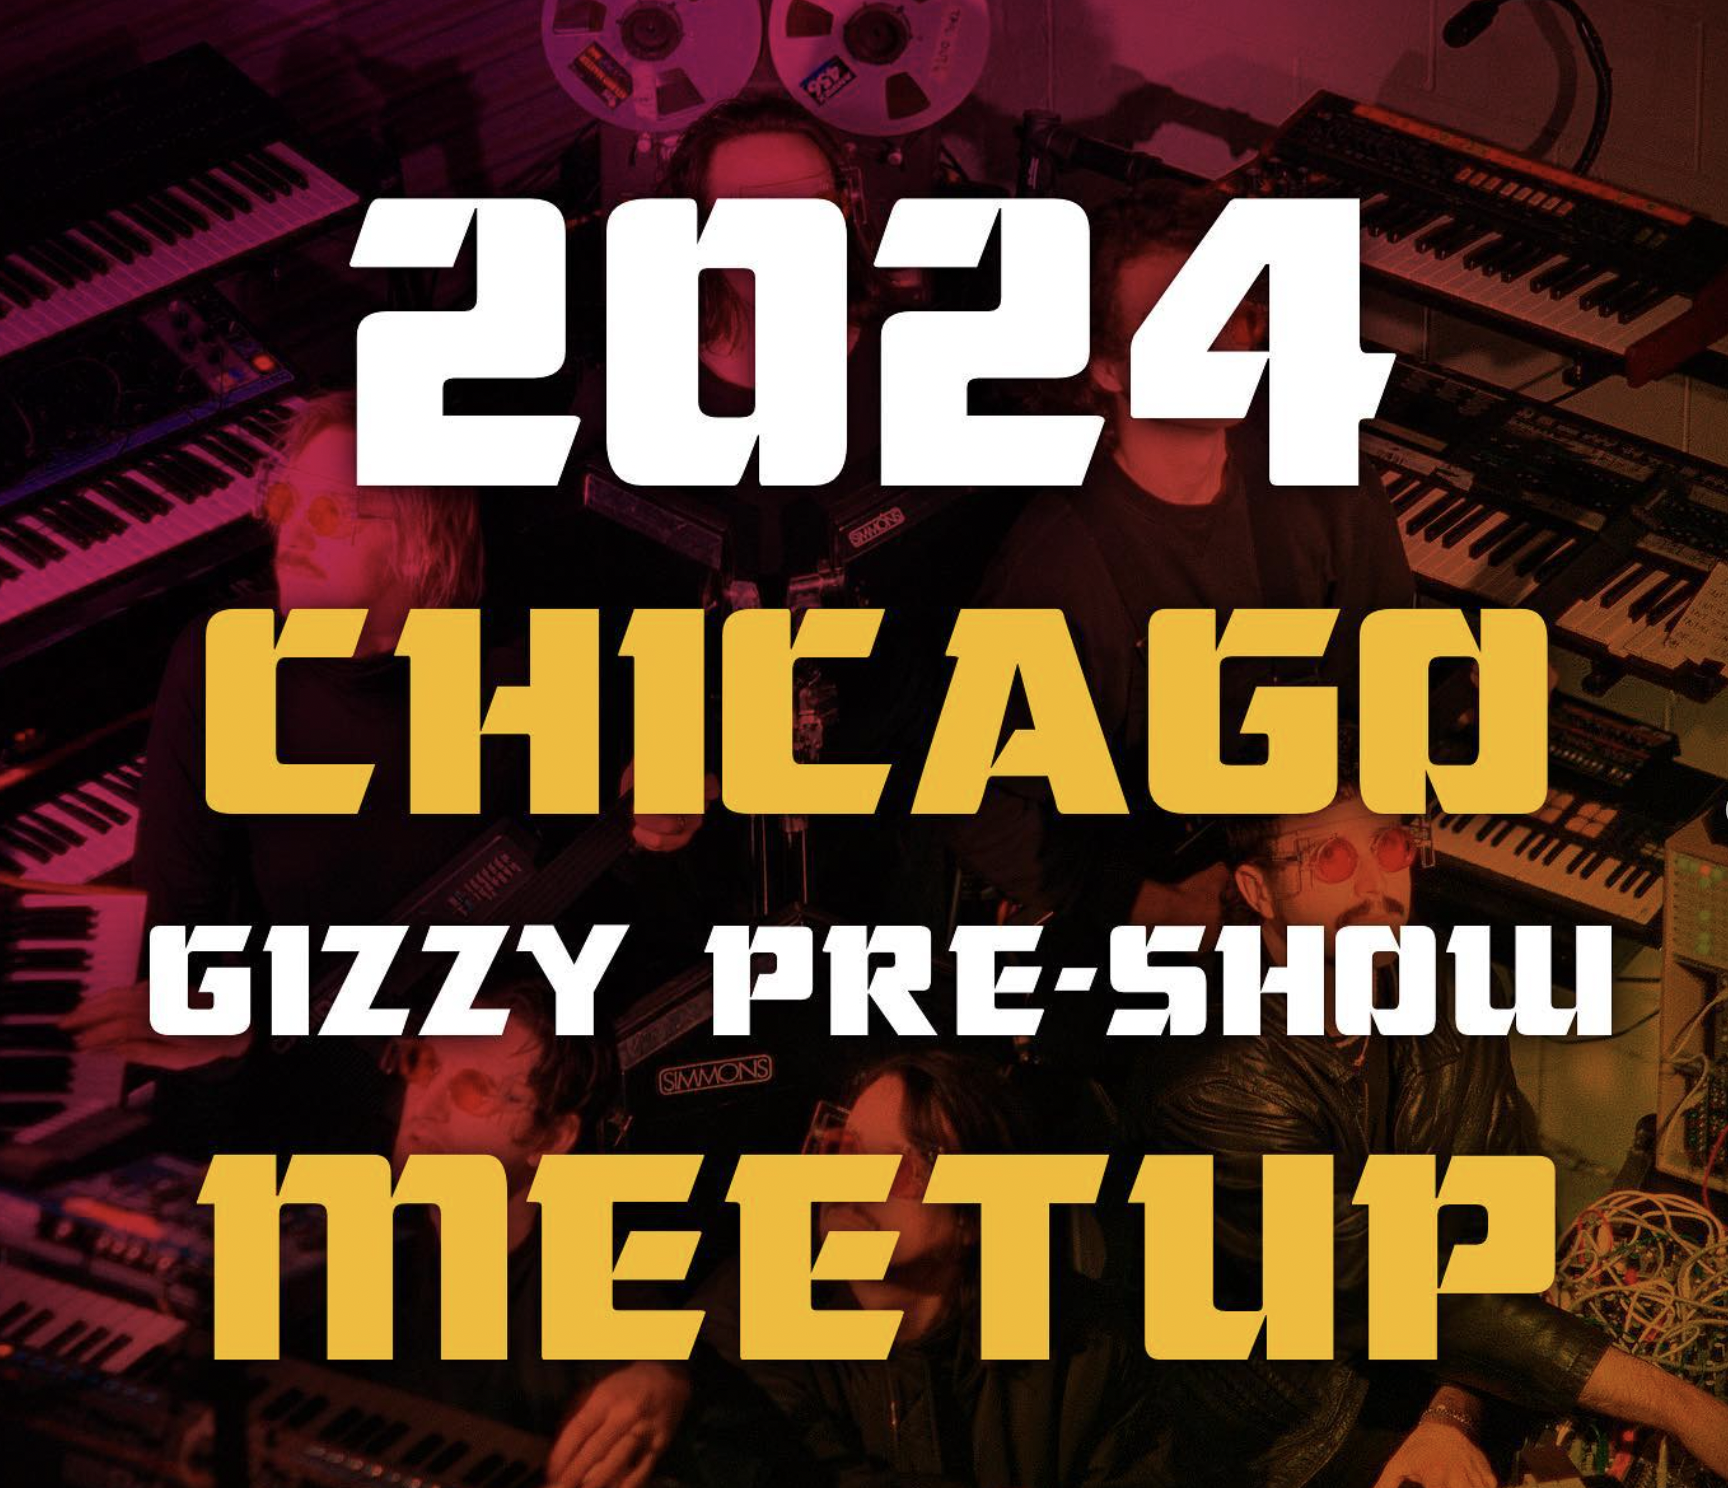 Chicago meetup